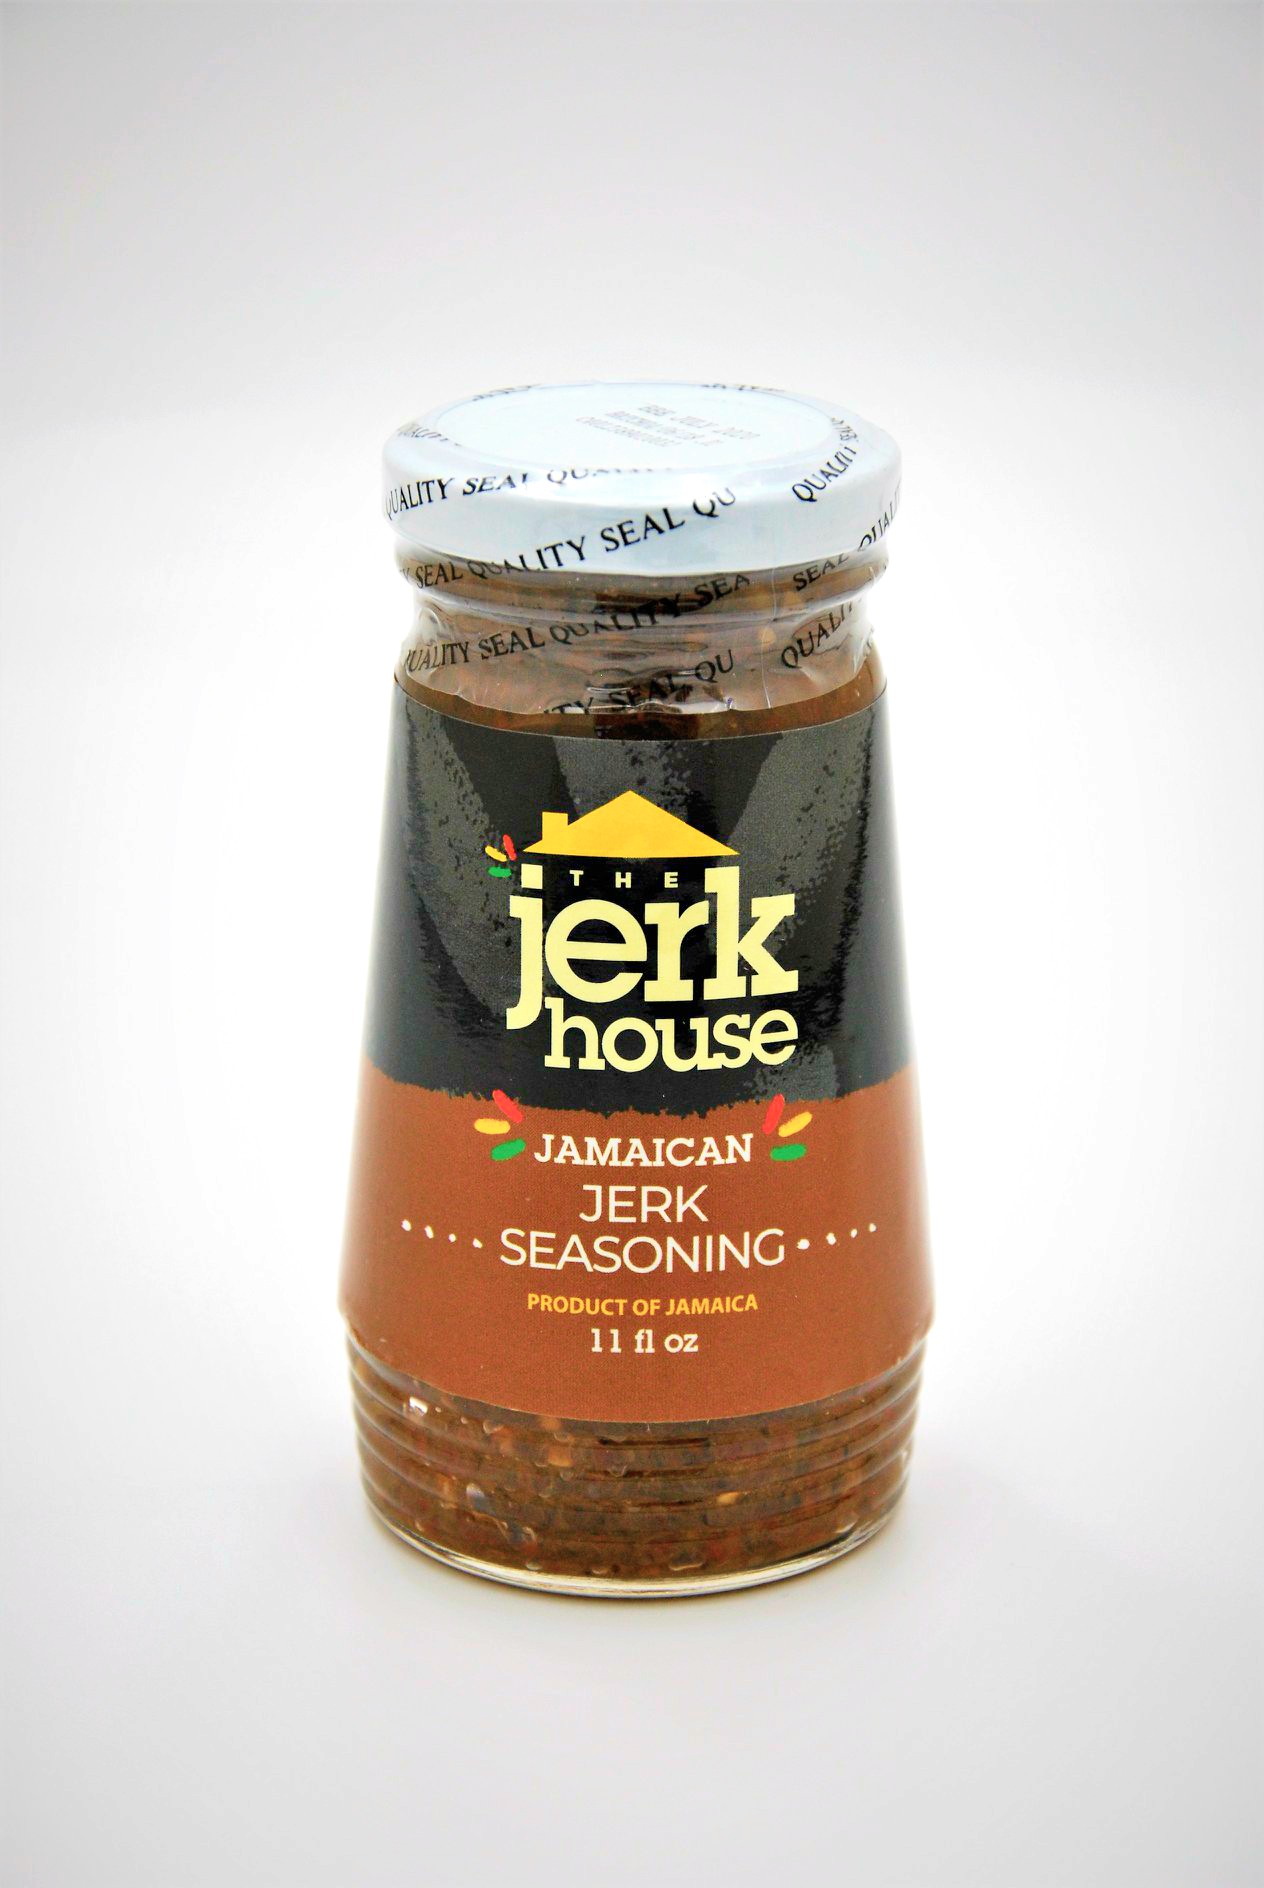 <img src="seasoning.jpg" alt="jerk seasoning vegan gift"/> 